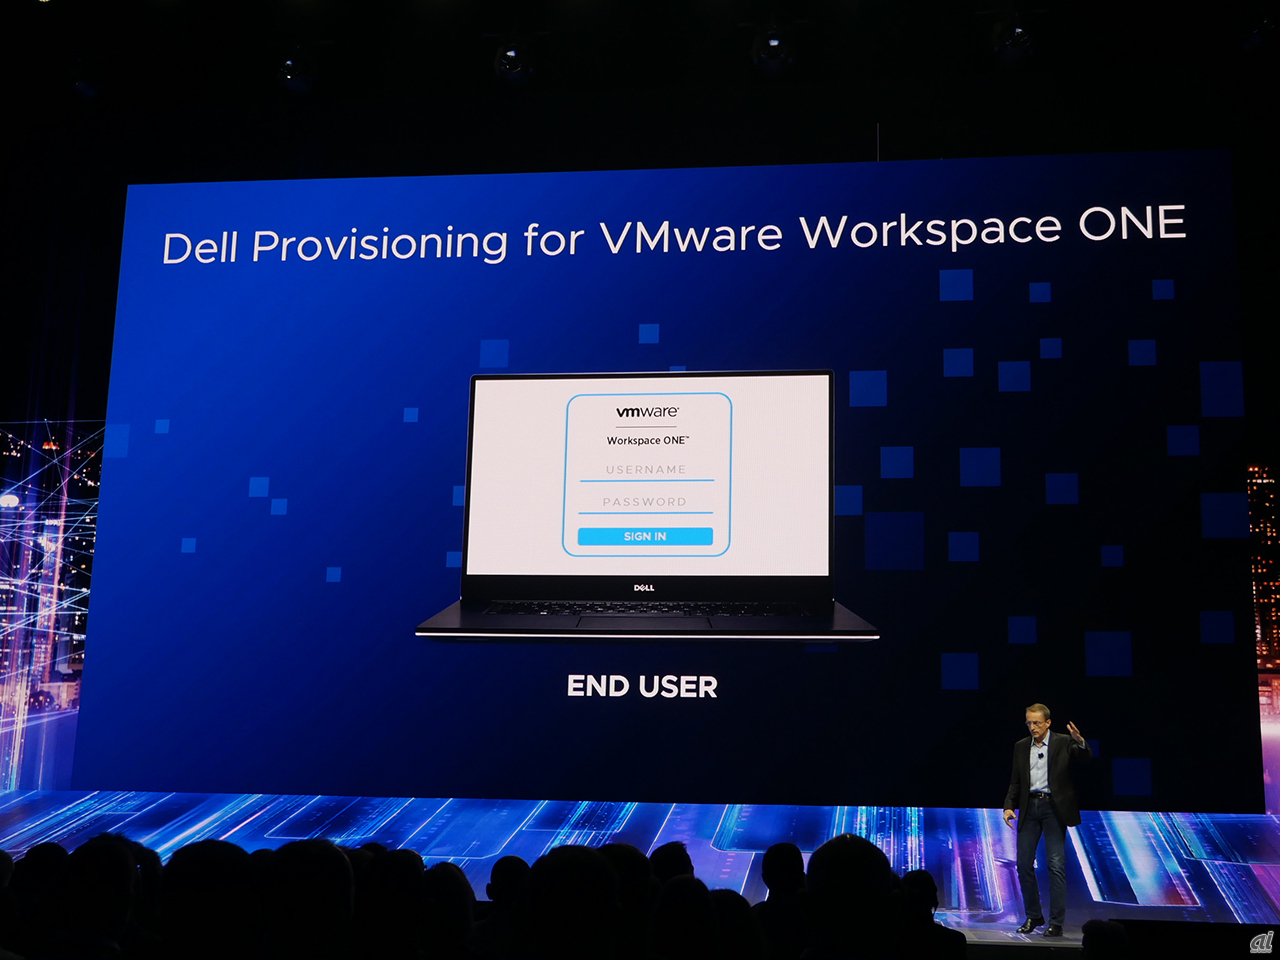 Dell Provisioning for Workspace Oneを通じて、すぐに仕事を開始できるPC環境を提供